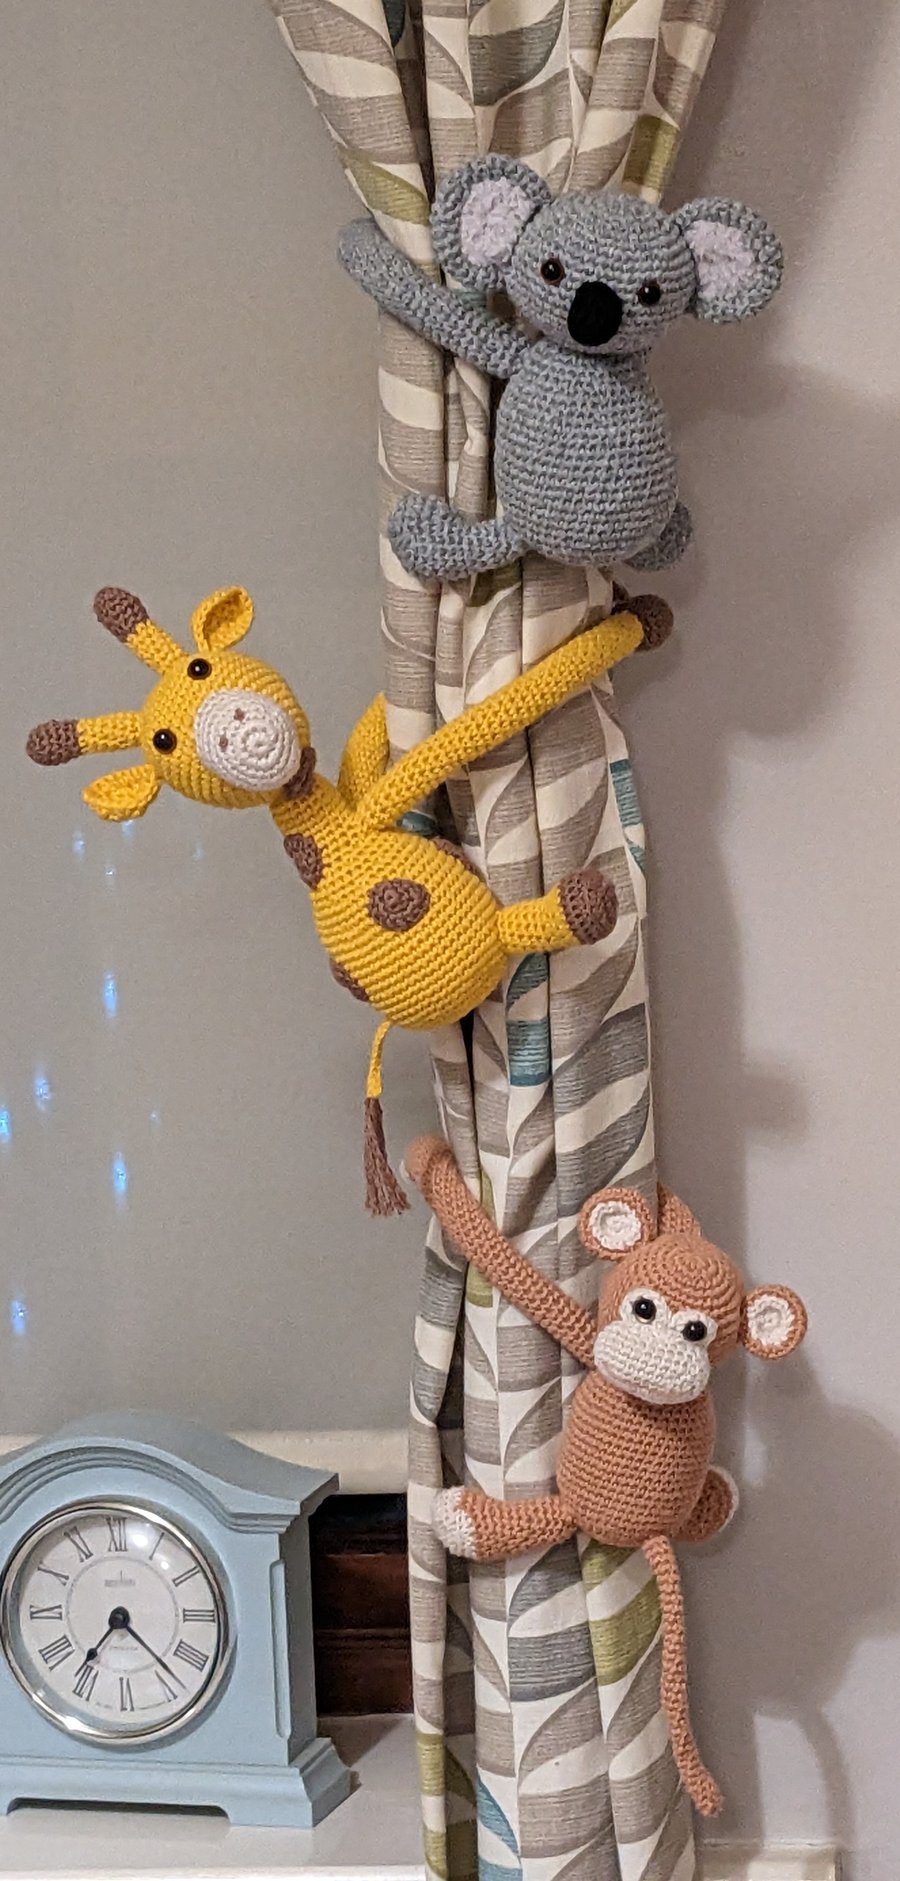 Hand crochet animal curtain tie backs - Folksy